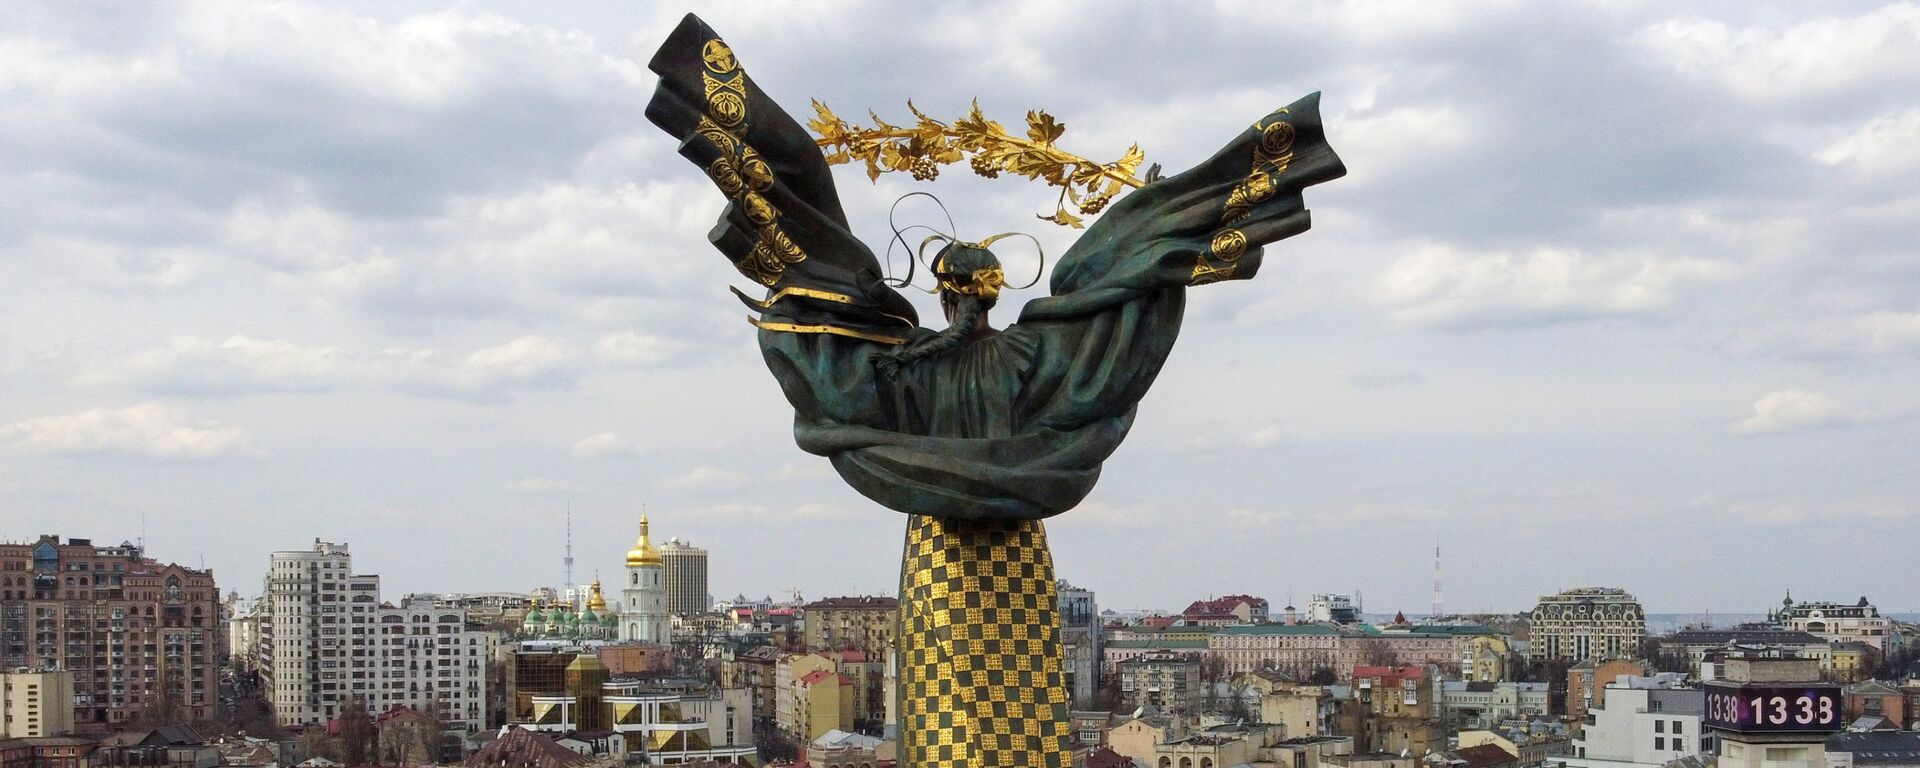 Монумент Независимости на площади Независимости в Киеве, 2021 год - 俄羅斯衛星通訊社, 1920, 15.08.2021